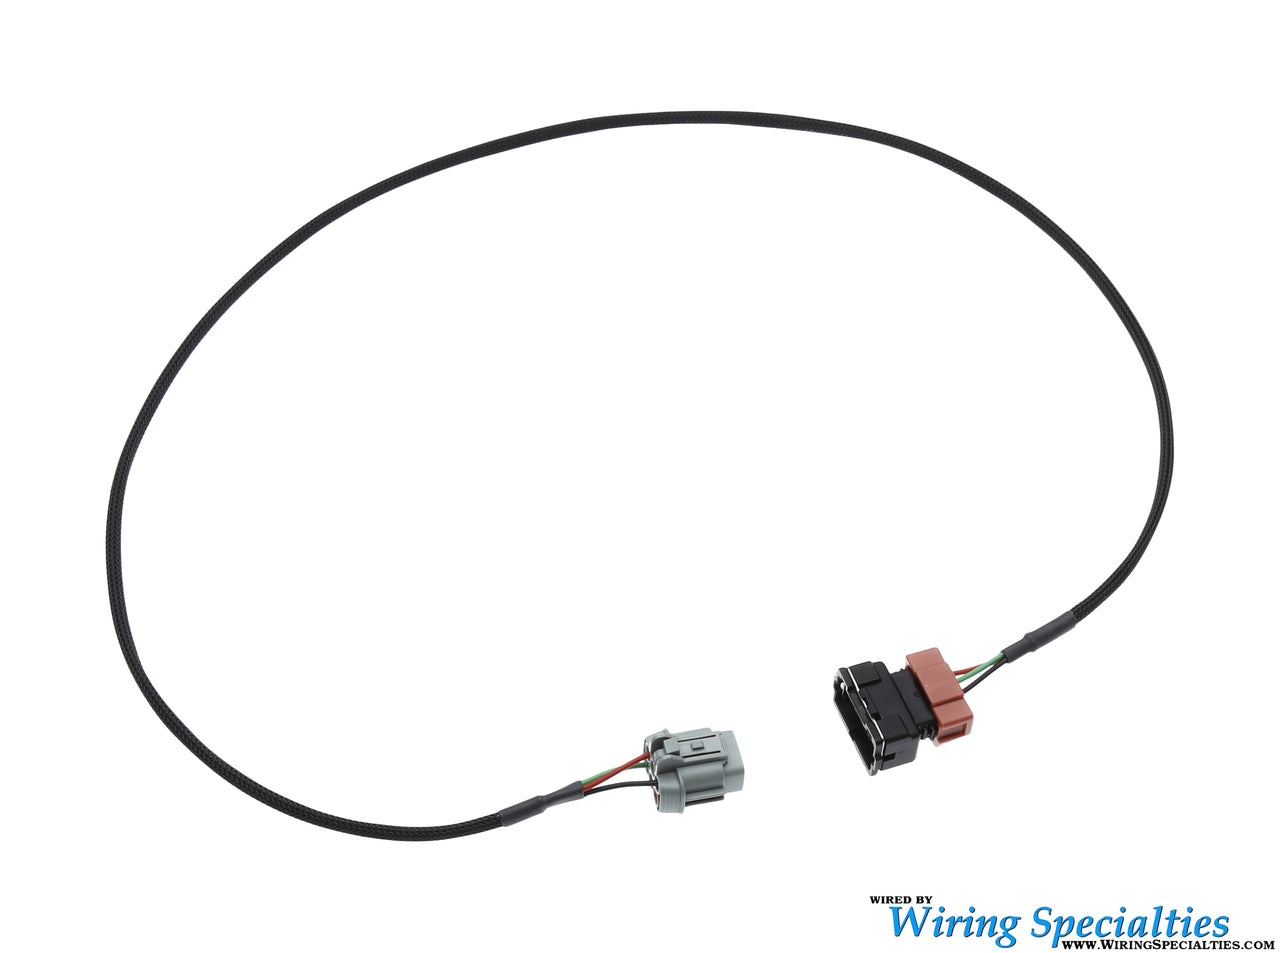 Wiring Specialties S13 SR20DET OEM MAF - PRO Plug n Play Sub-Harness - CLEARANCE